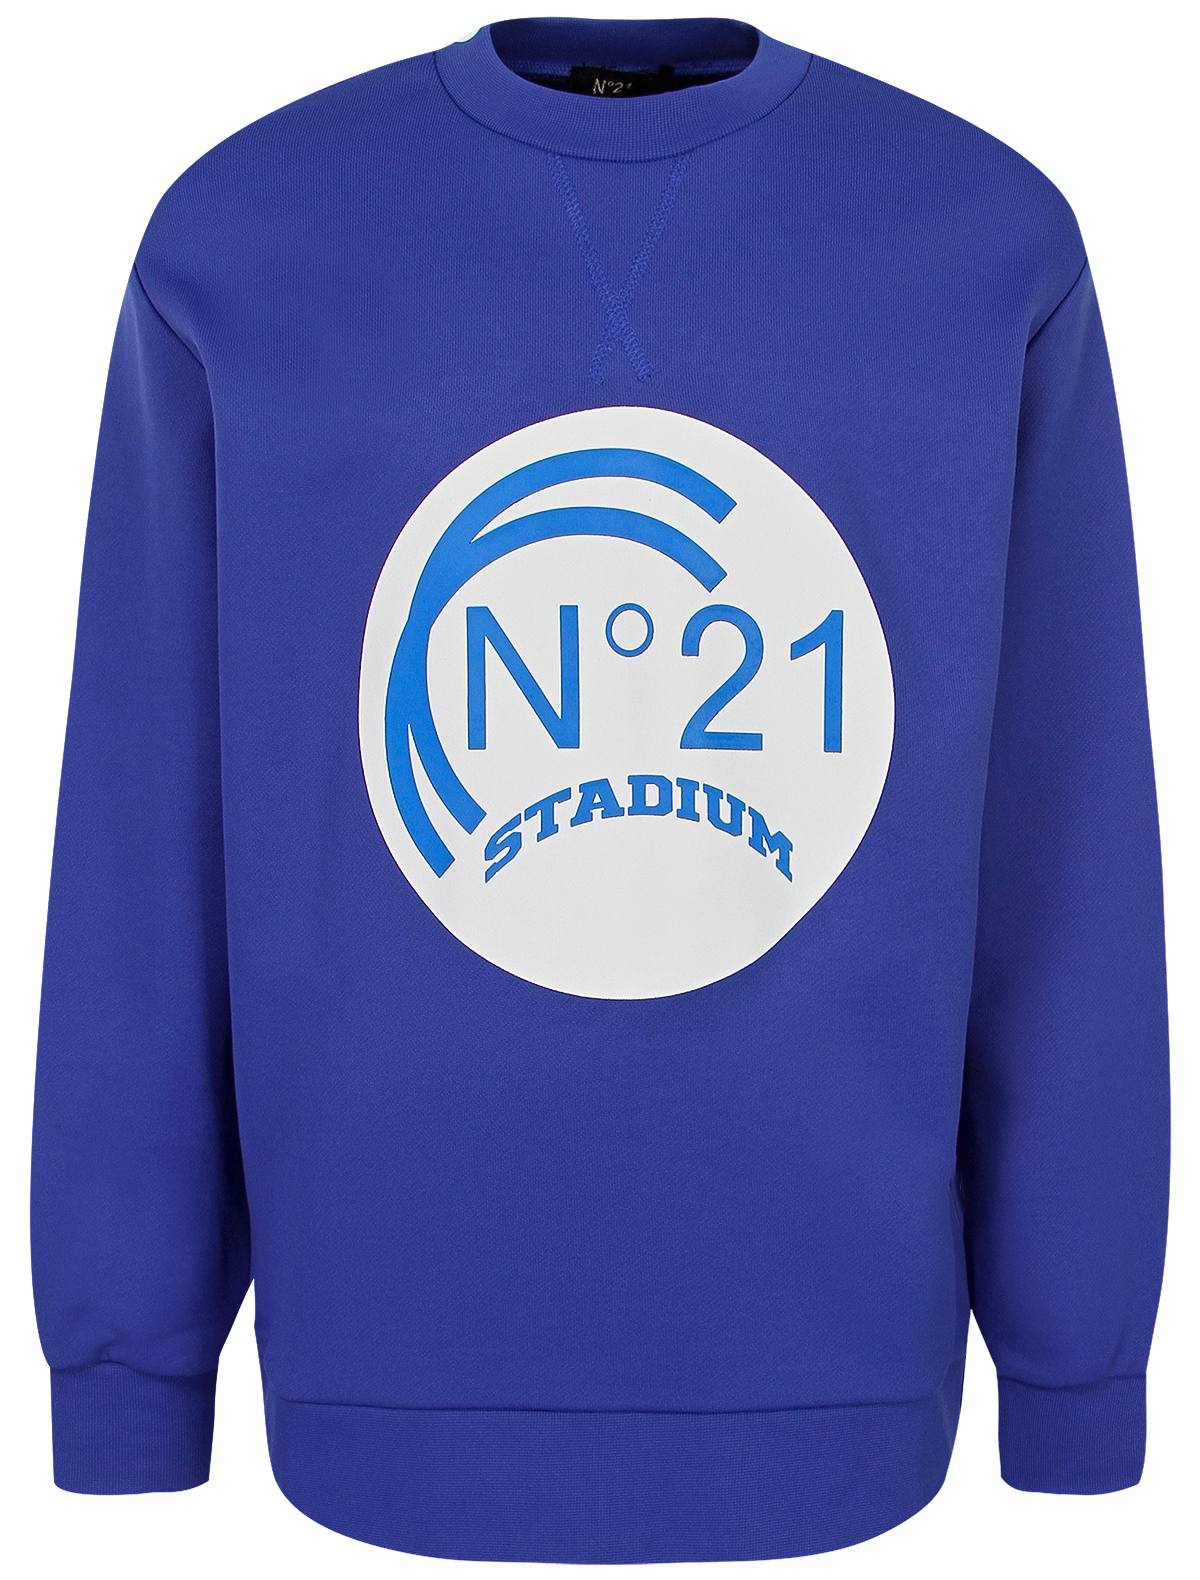 спортивные свитшот n21 для мальчика, синий